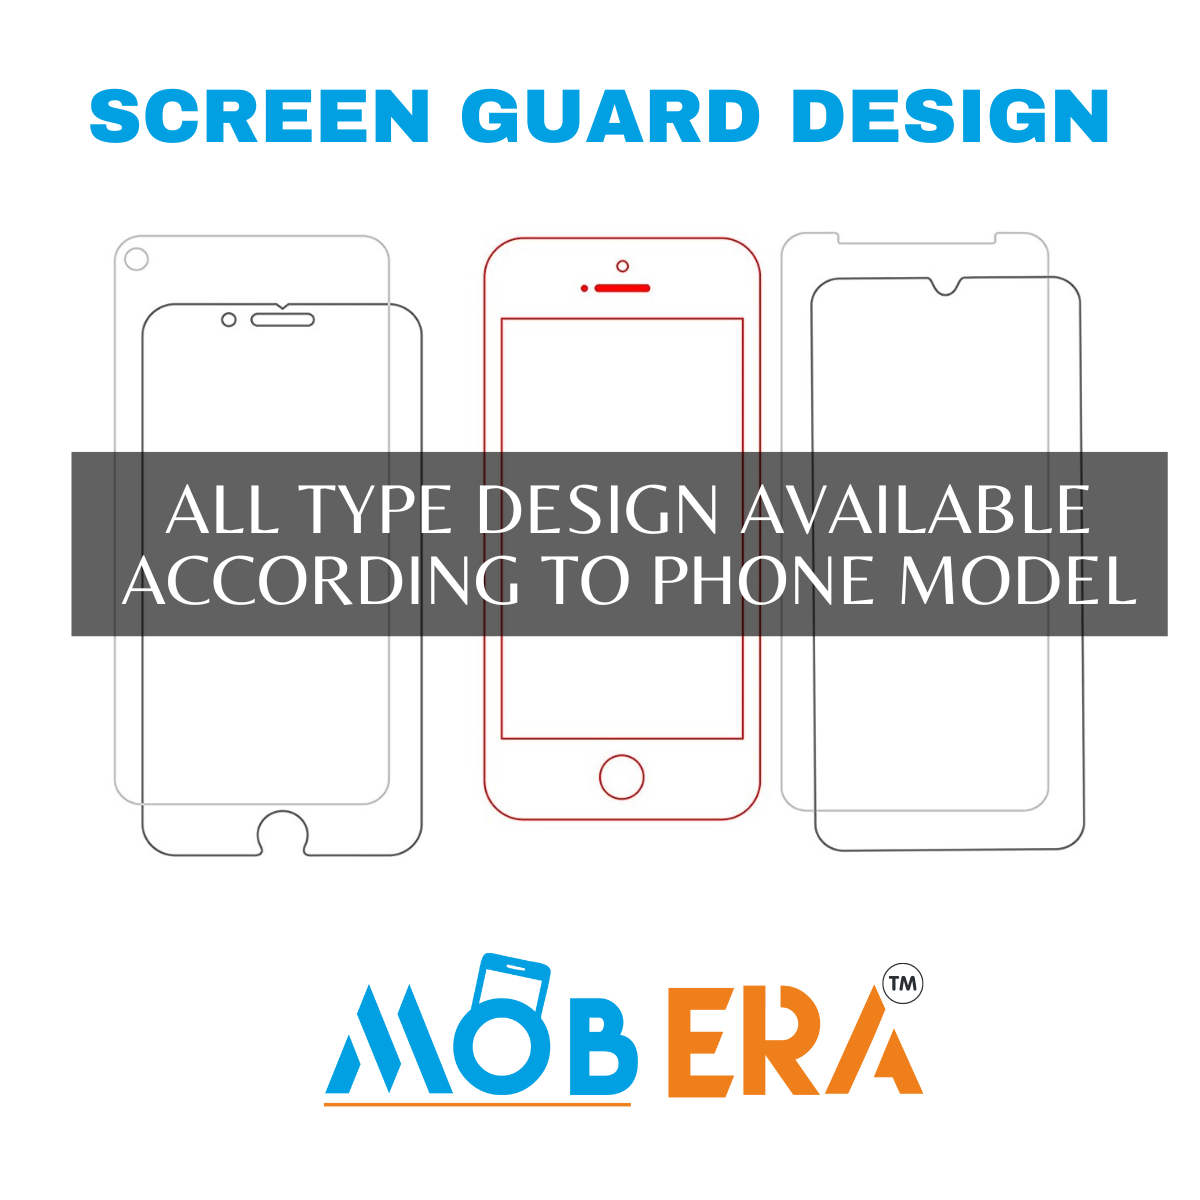 mobera mobile screen guard image